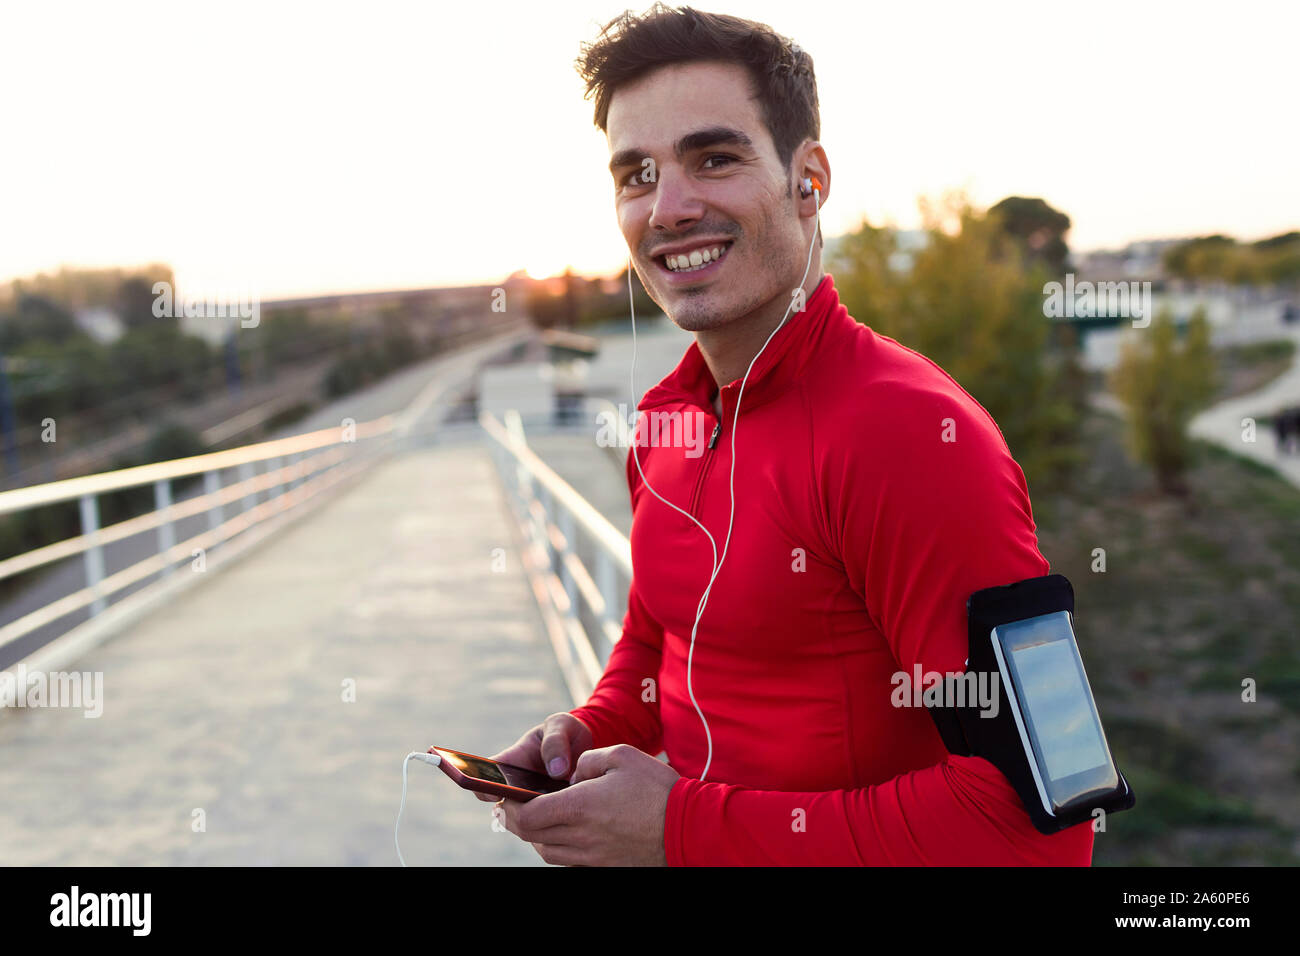 Jogger mit Smartphone im Arm pocket, Smartphone und Kamera Stockfoto